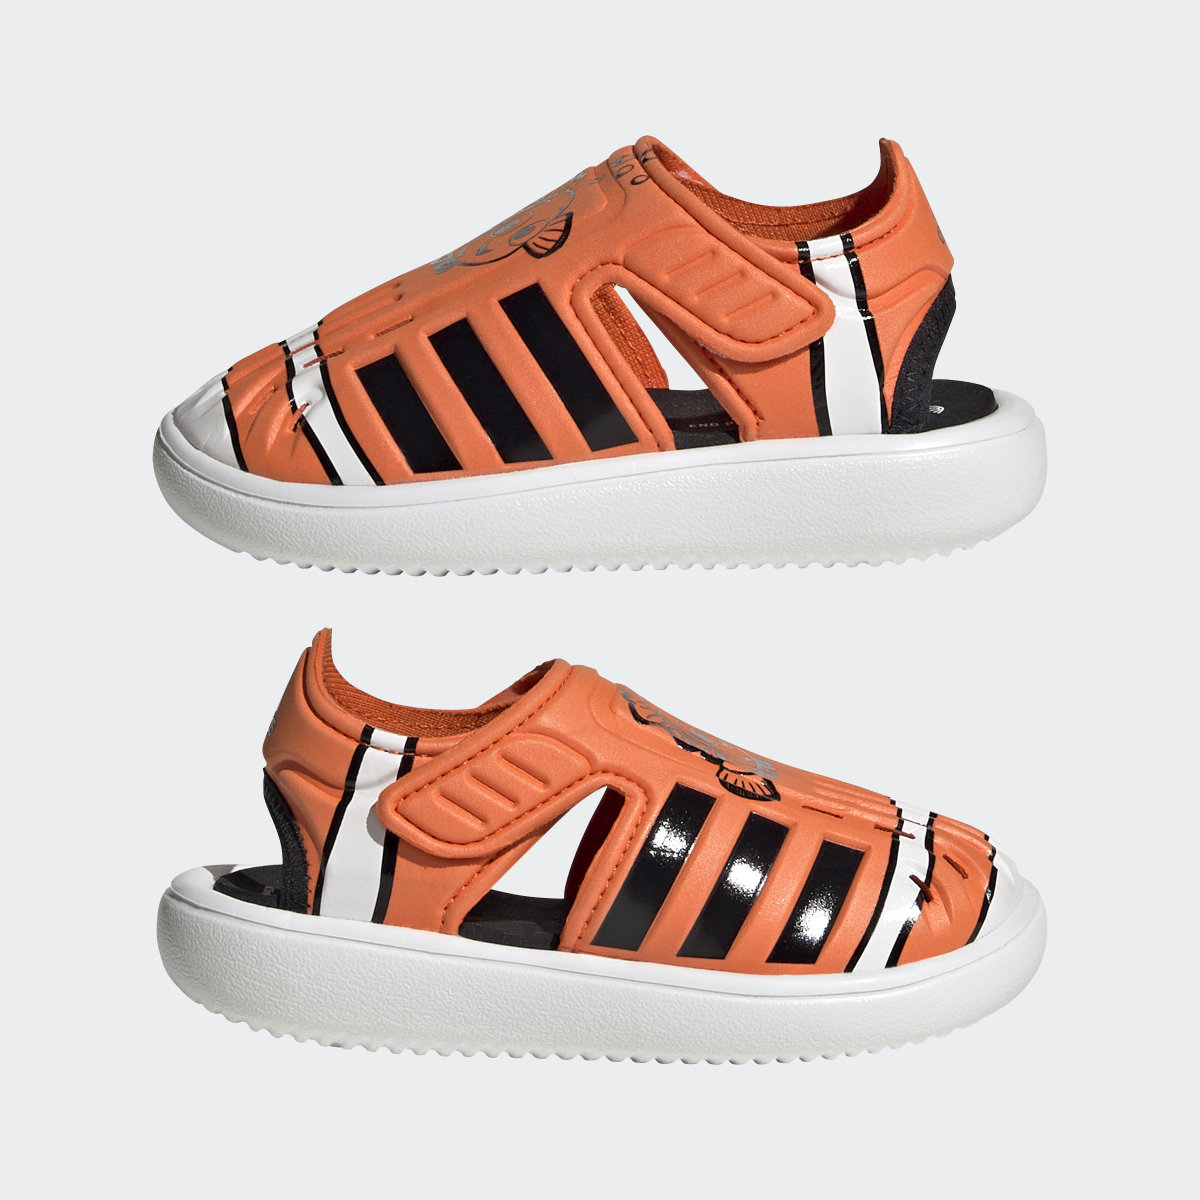 Adidas Findet Nemo Closed Toe Summer Sandale. 8